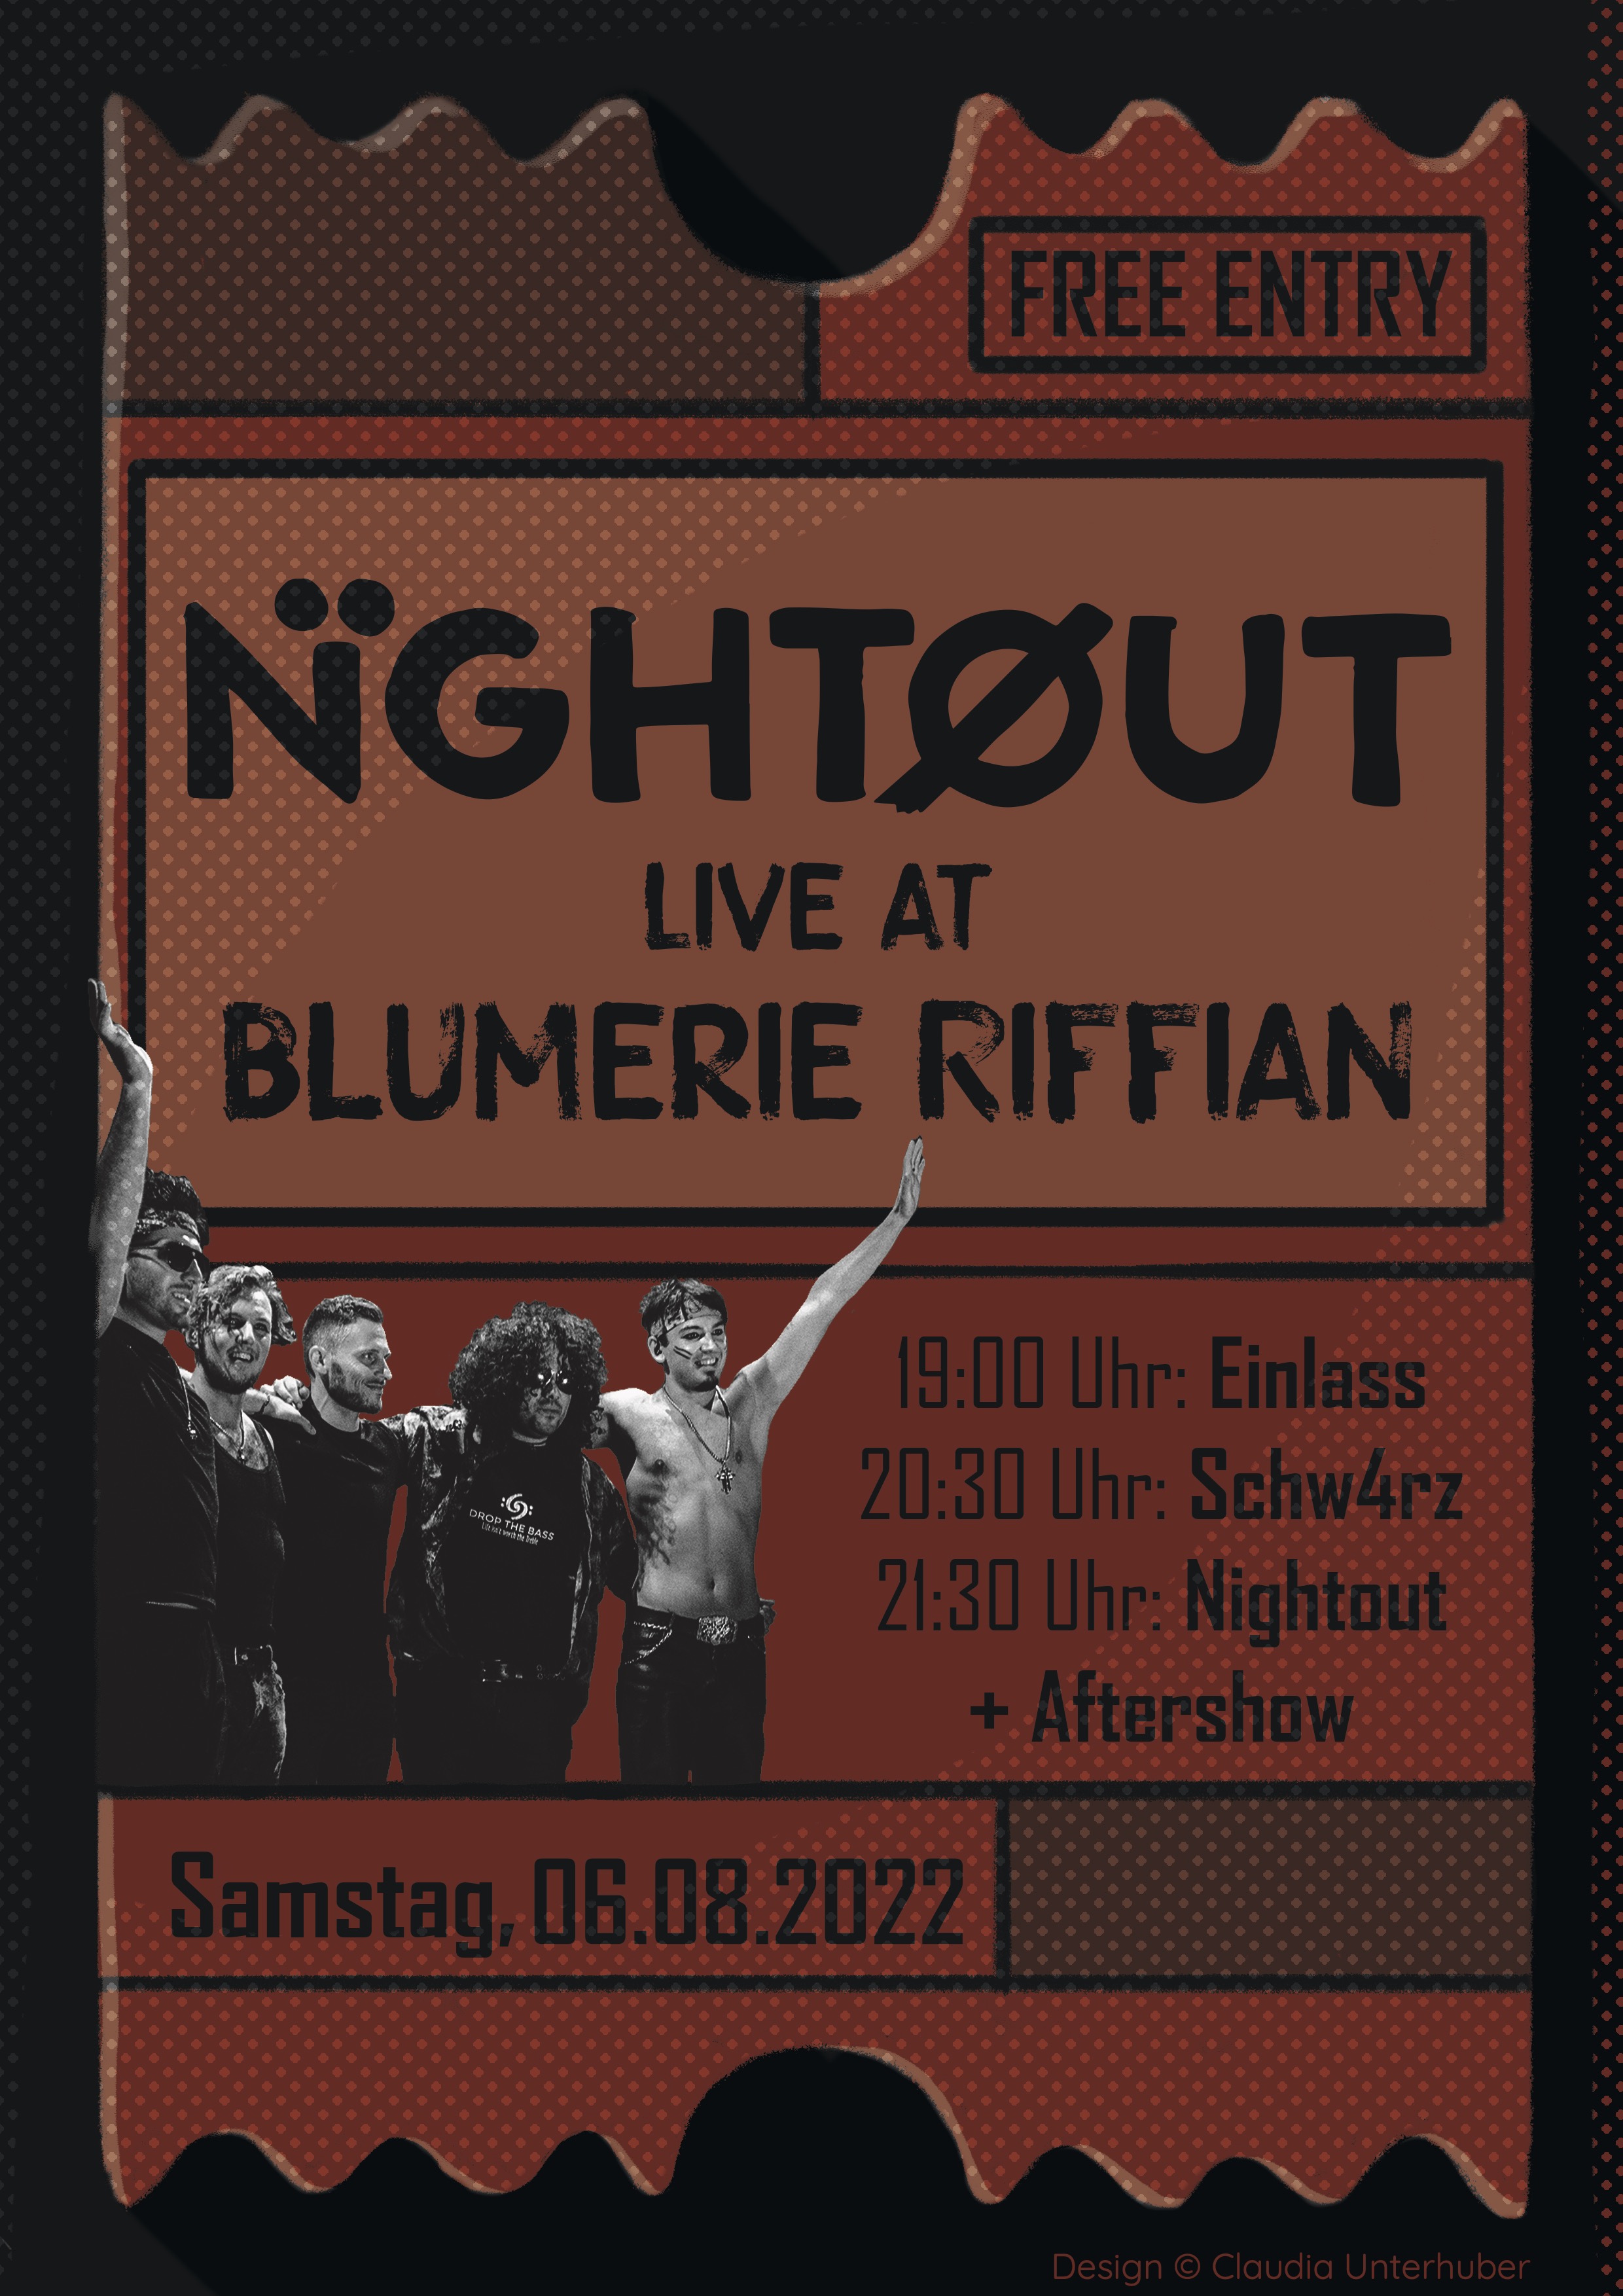 Heute Abend in Riffian: Zwei Live-Bands mit Rock-DJ als Aftershow. Grafik: Claudia Unterhuber